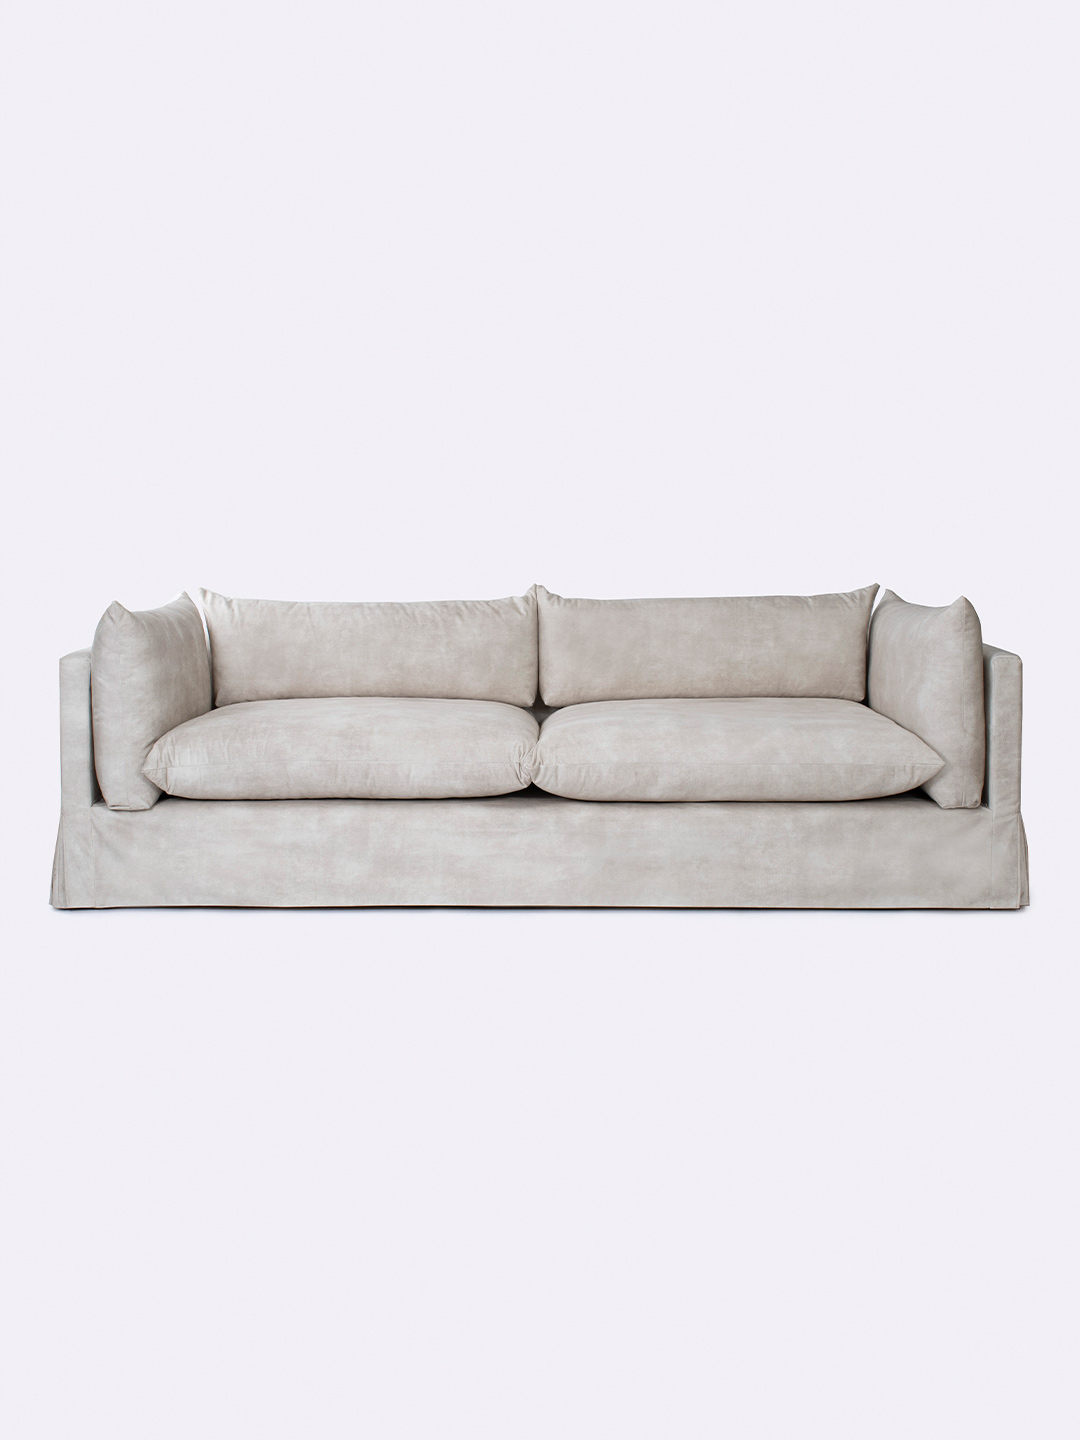 Jax Sofa Cloud velvet grey beige Tallira Furniture The Rug Collection front